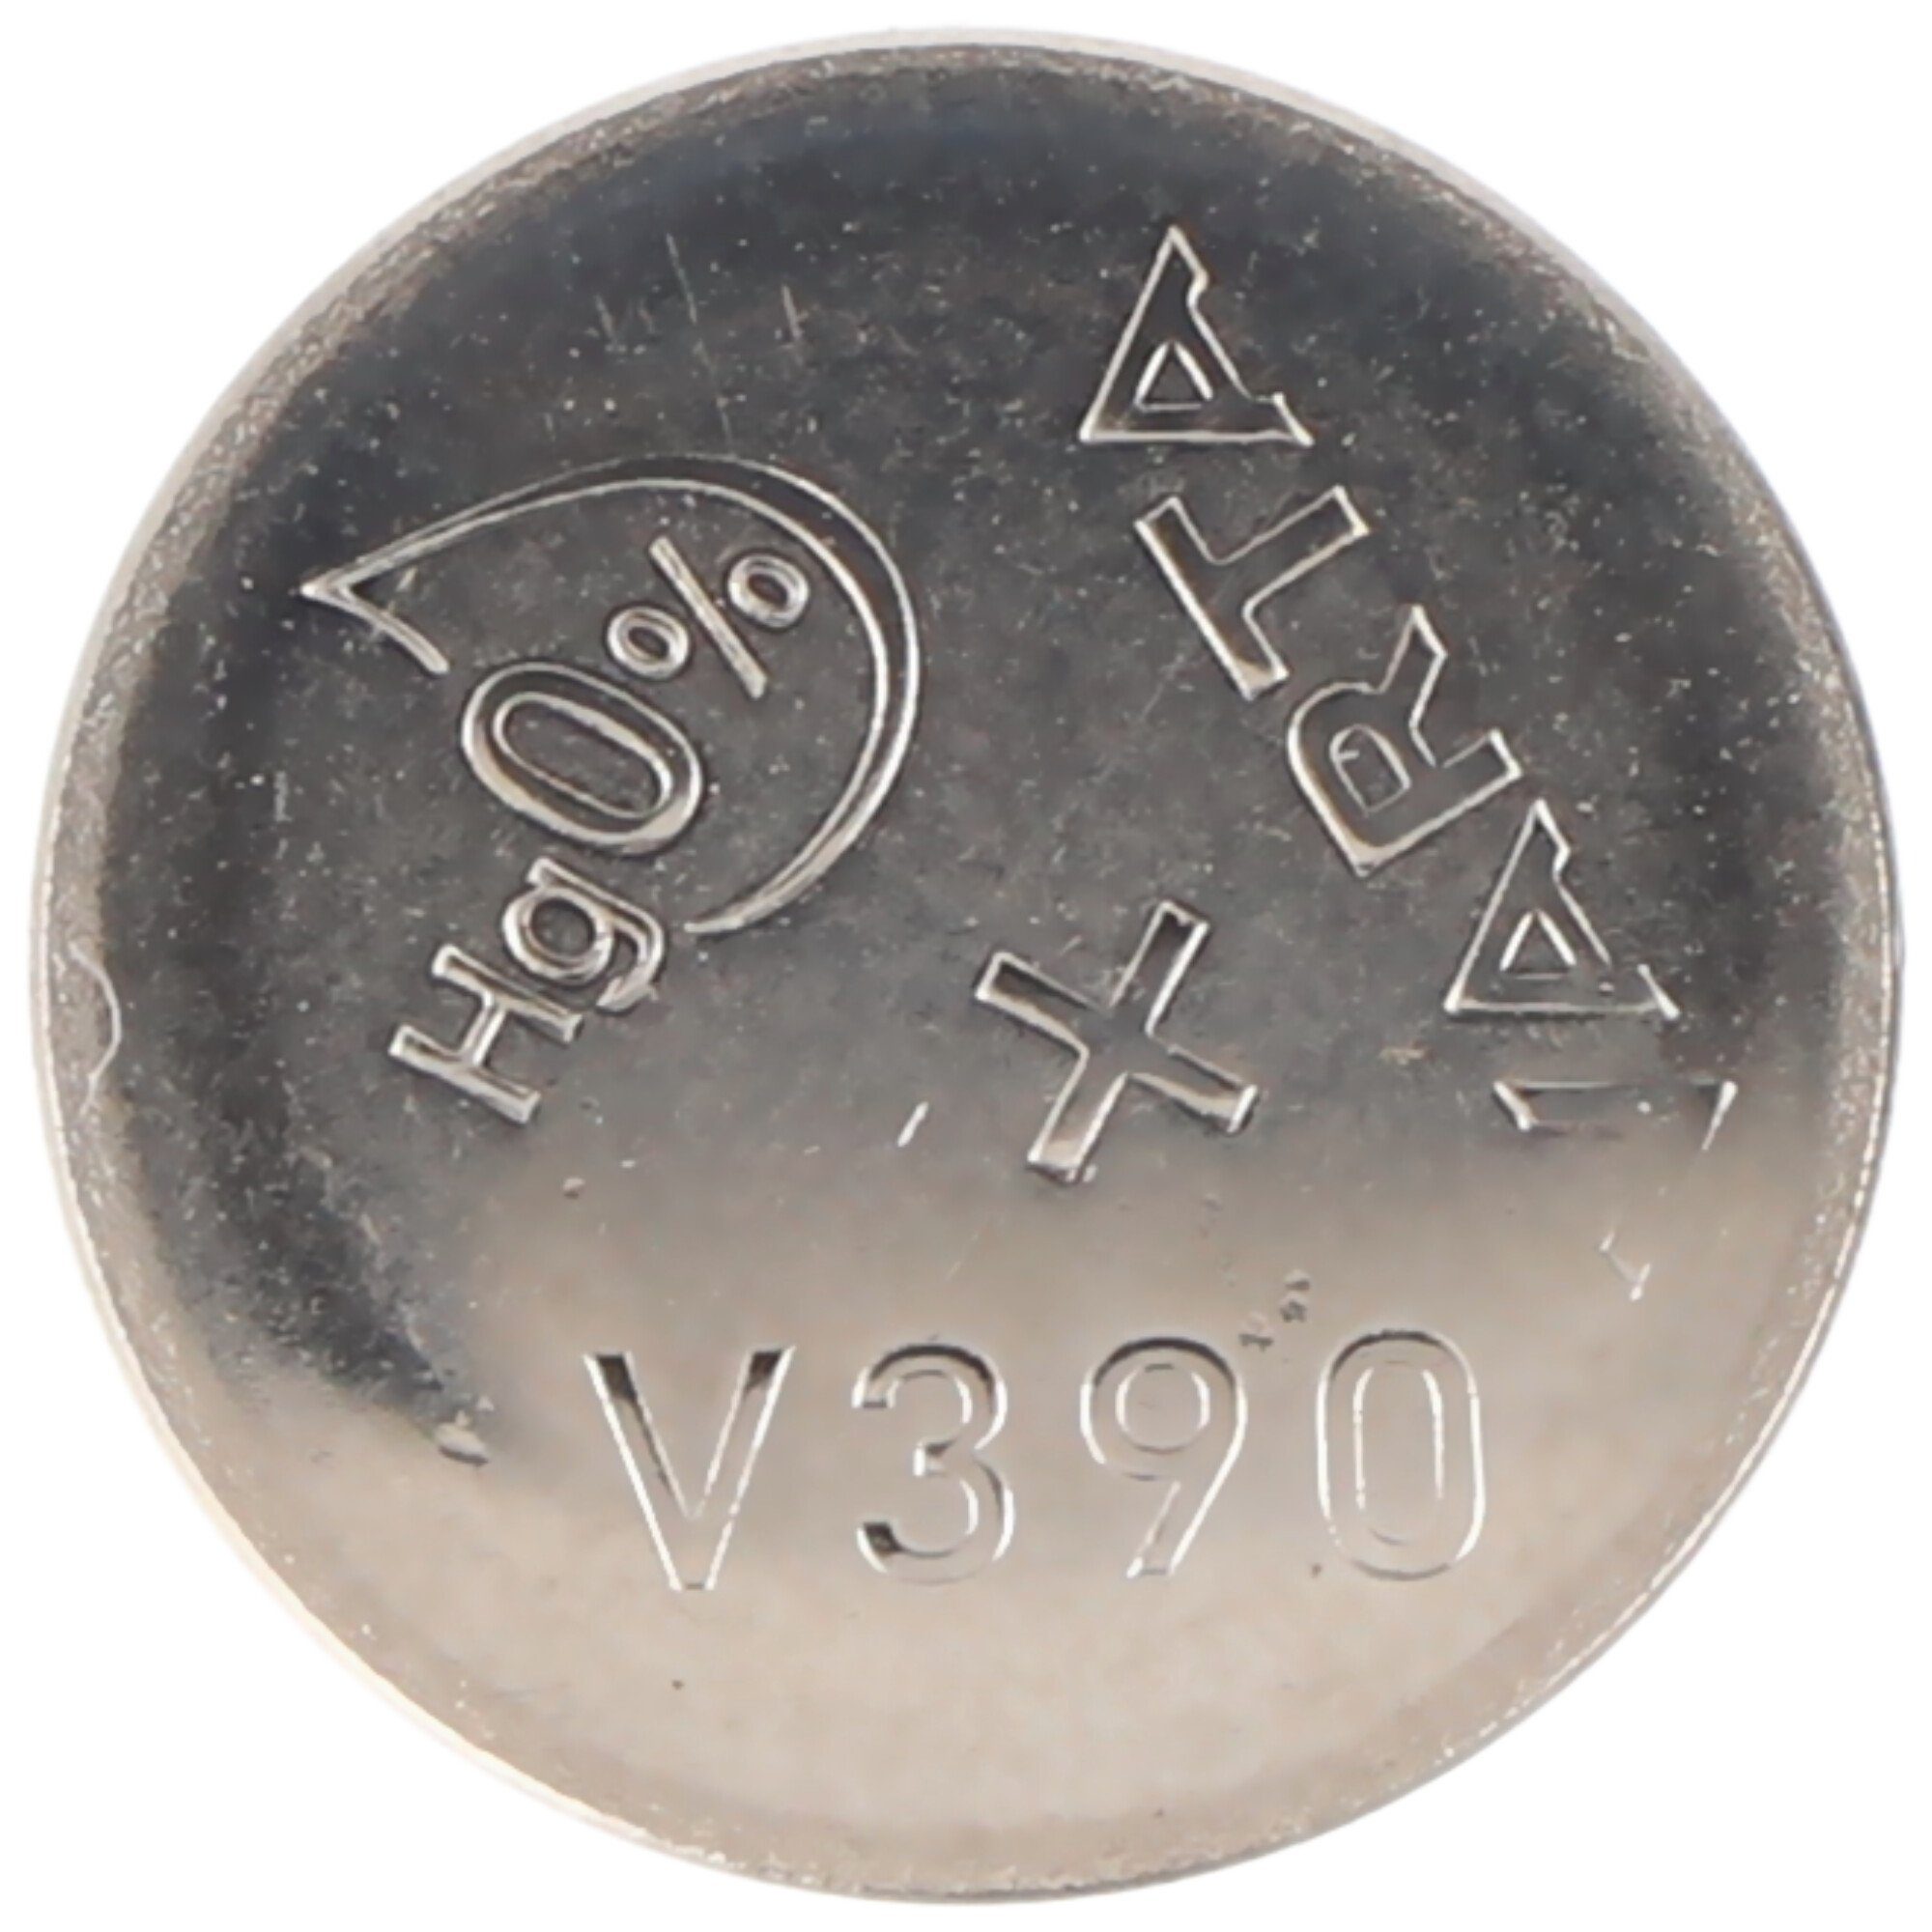 Silberoxid-Zink-Knopfzelle, Knopfzelle SR54 Uhrenbatterie - V 1,55 (V390) Varta VARTA